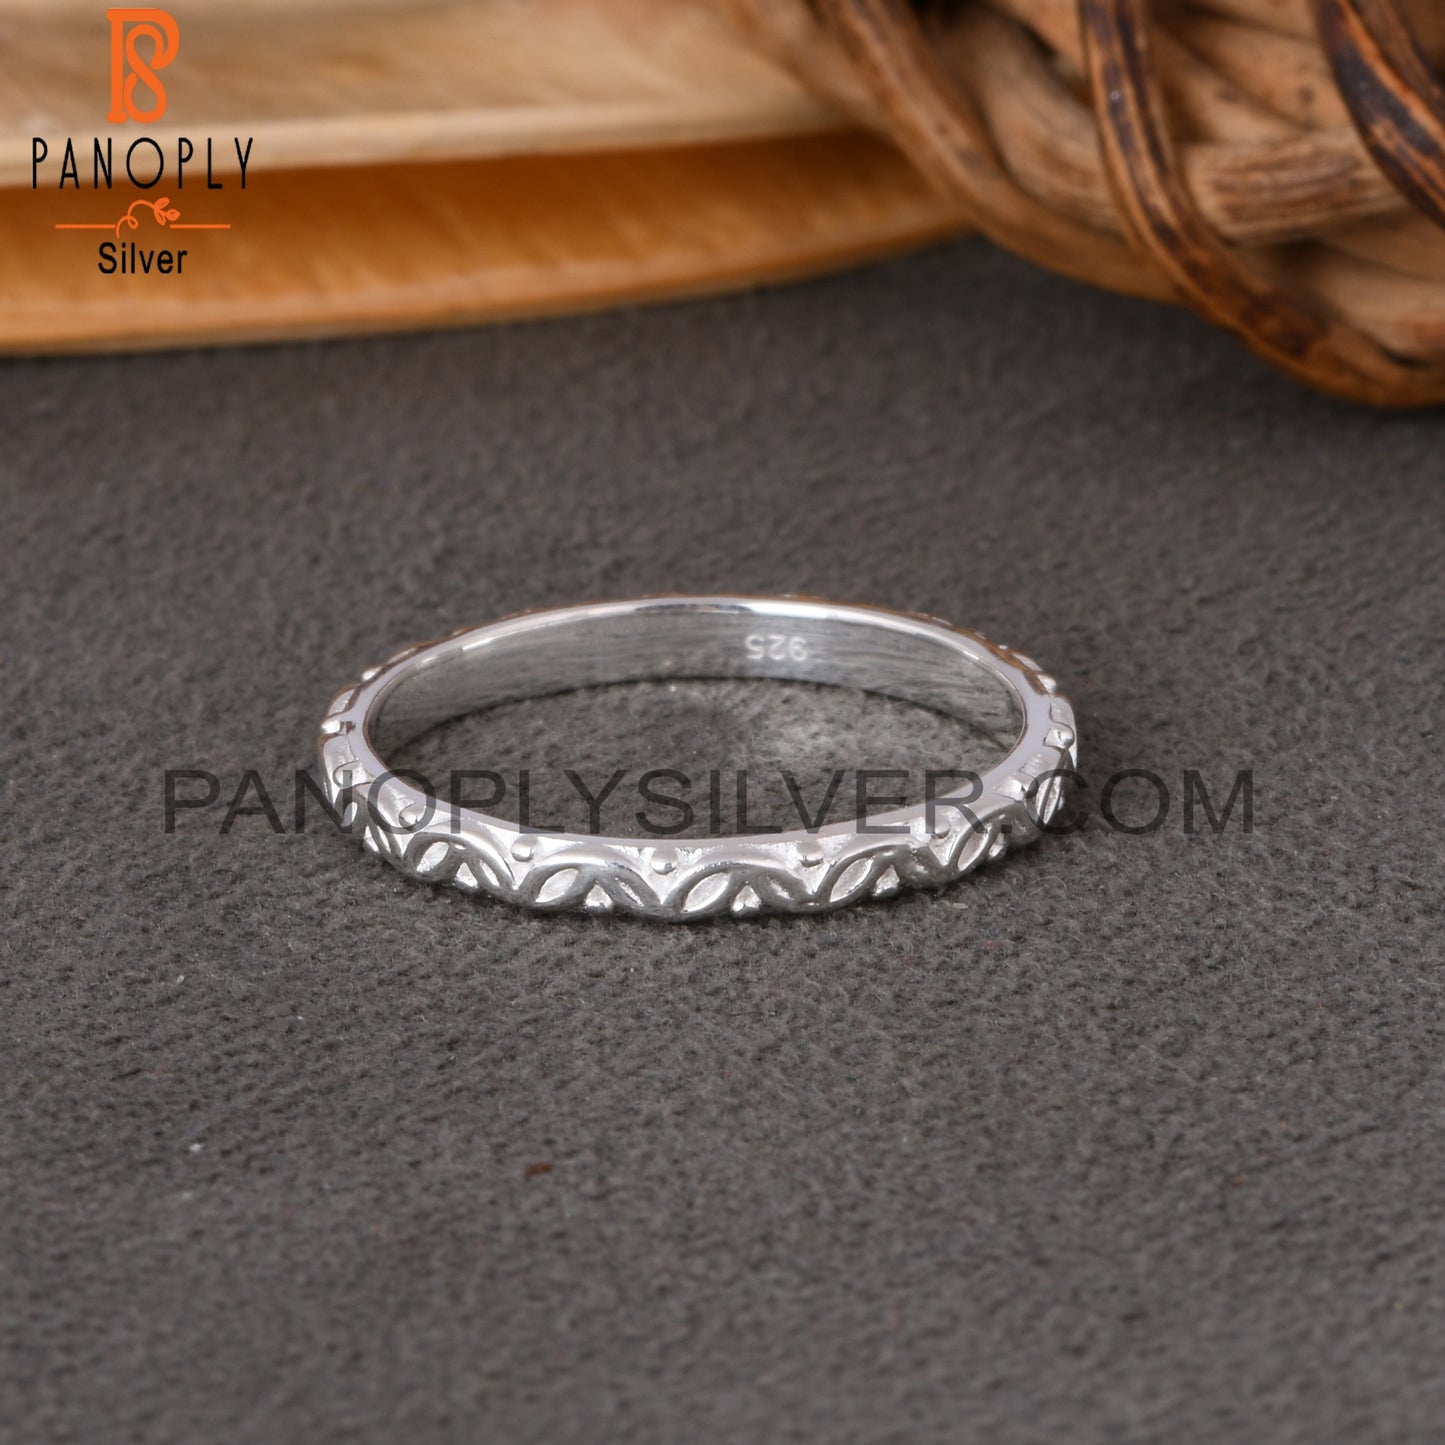 Flower Bnad 925 Sterling Silver Ring